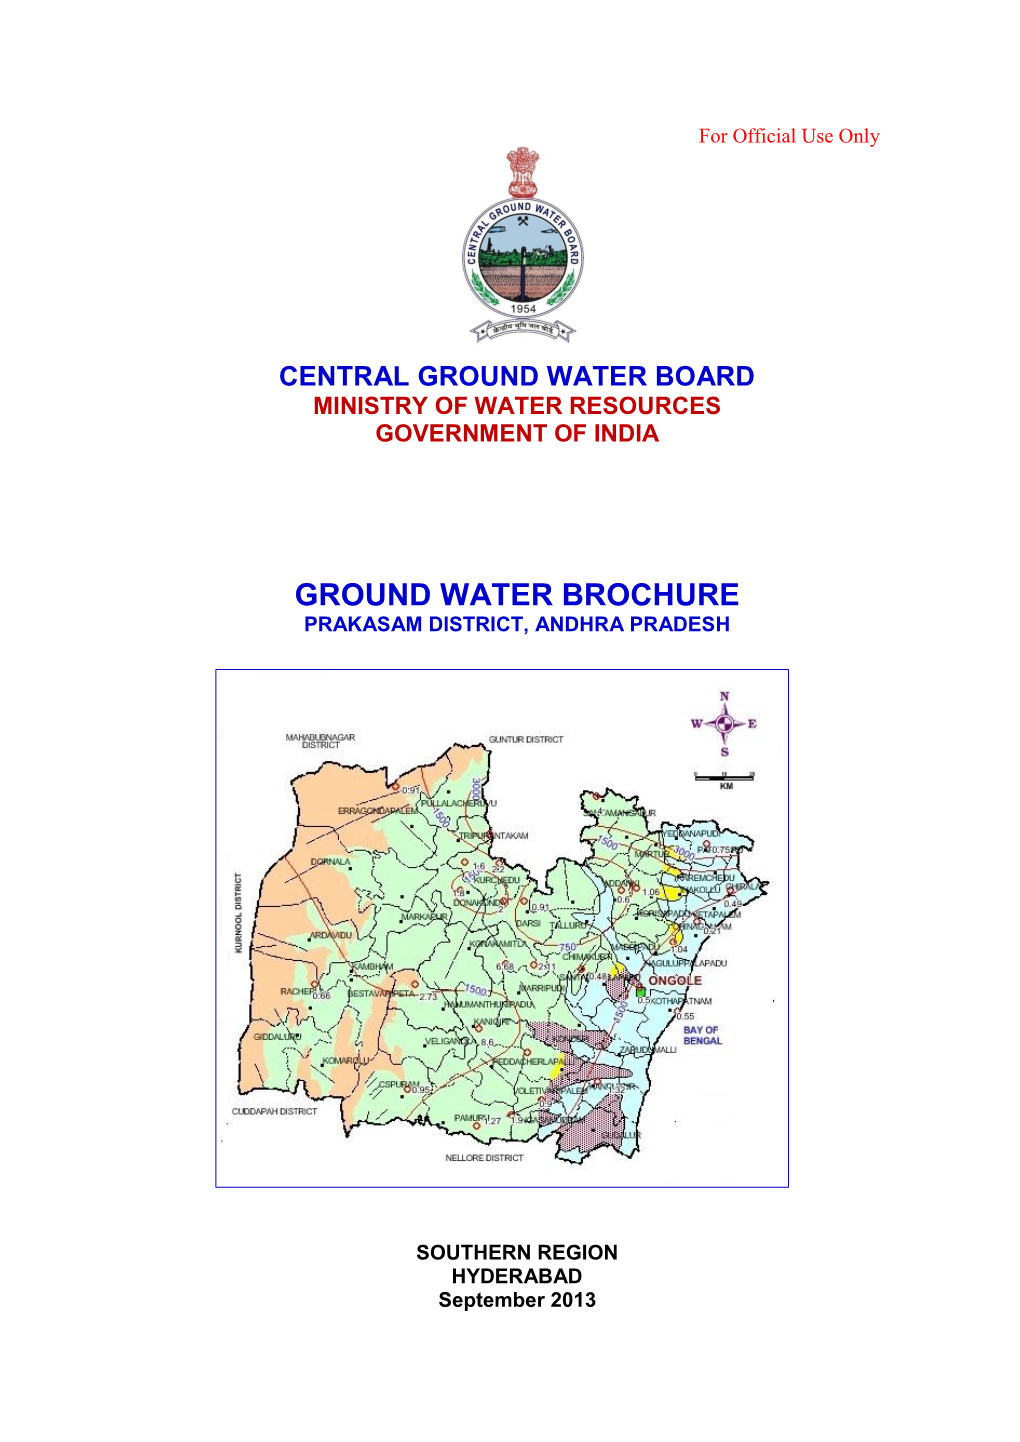 Ground Water Brochure Prakasam District, Andhra Pradesh